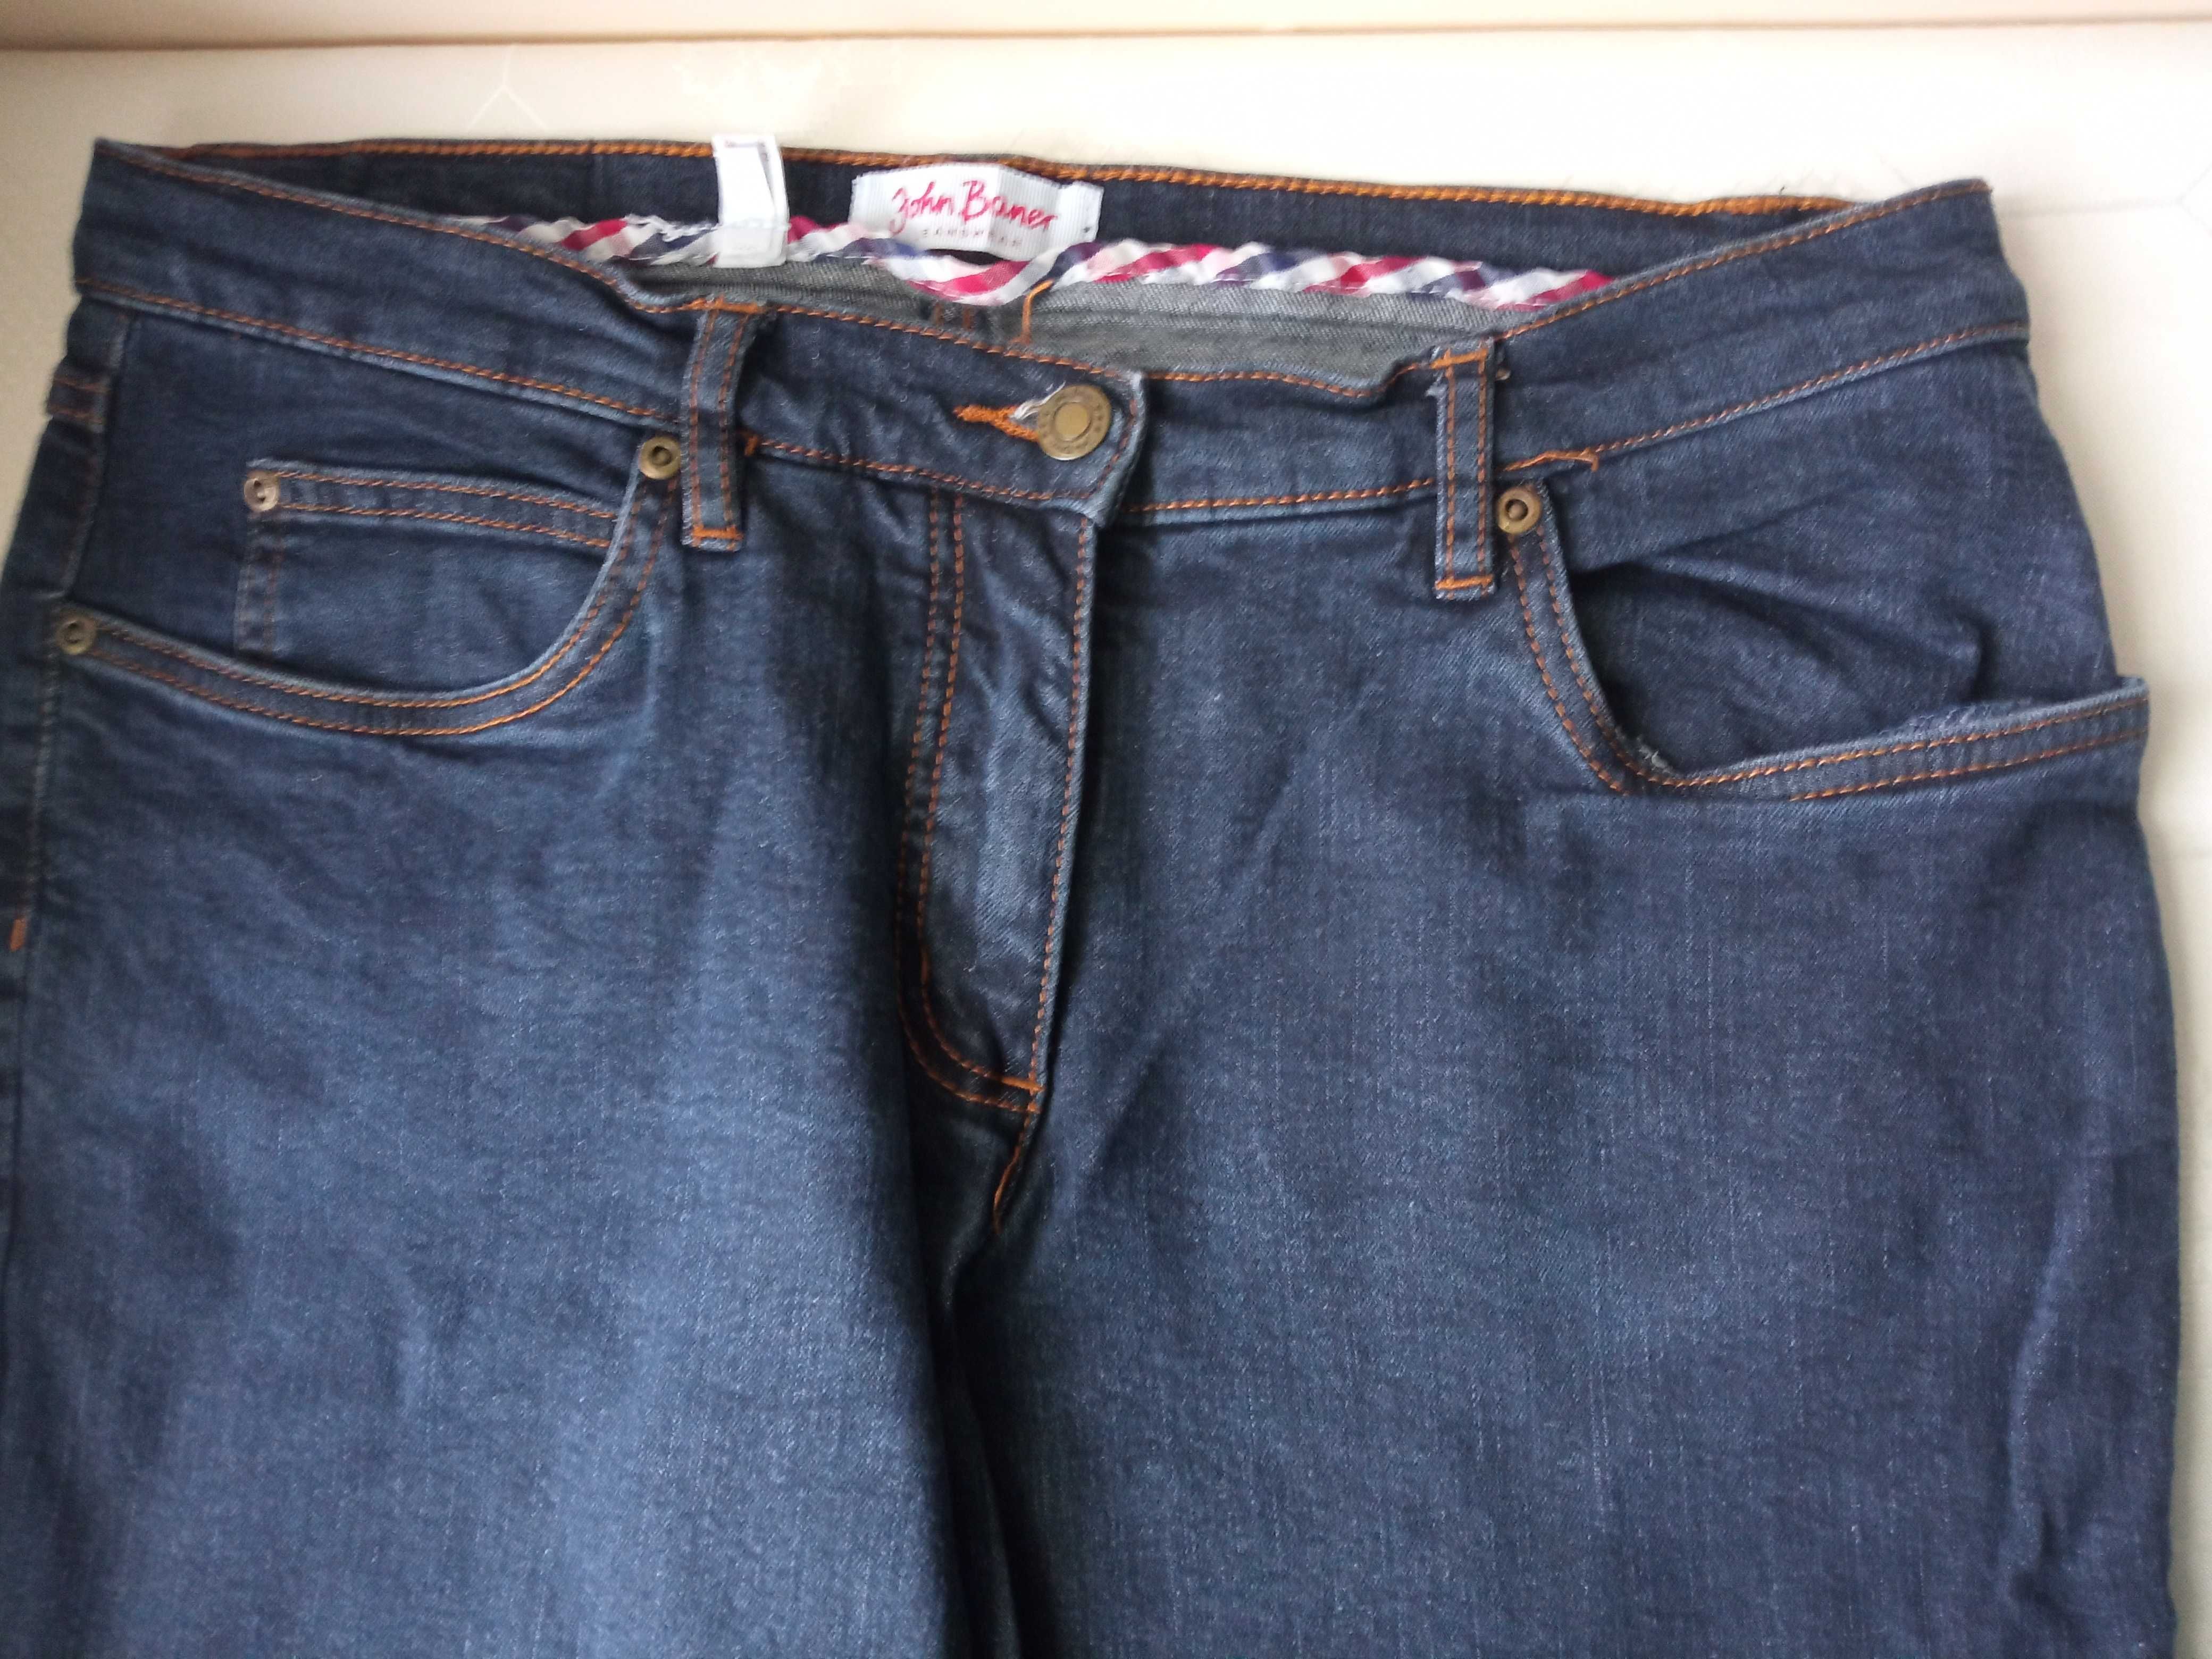 John Baner damskie spodnie jeans r 44 pas 86-92cm